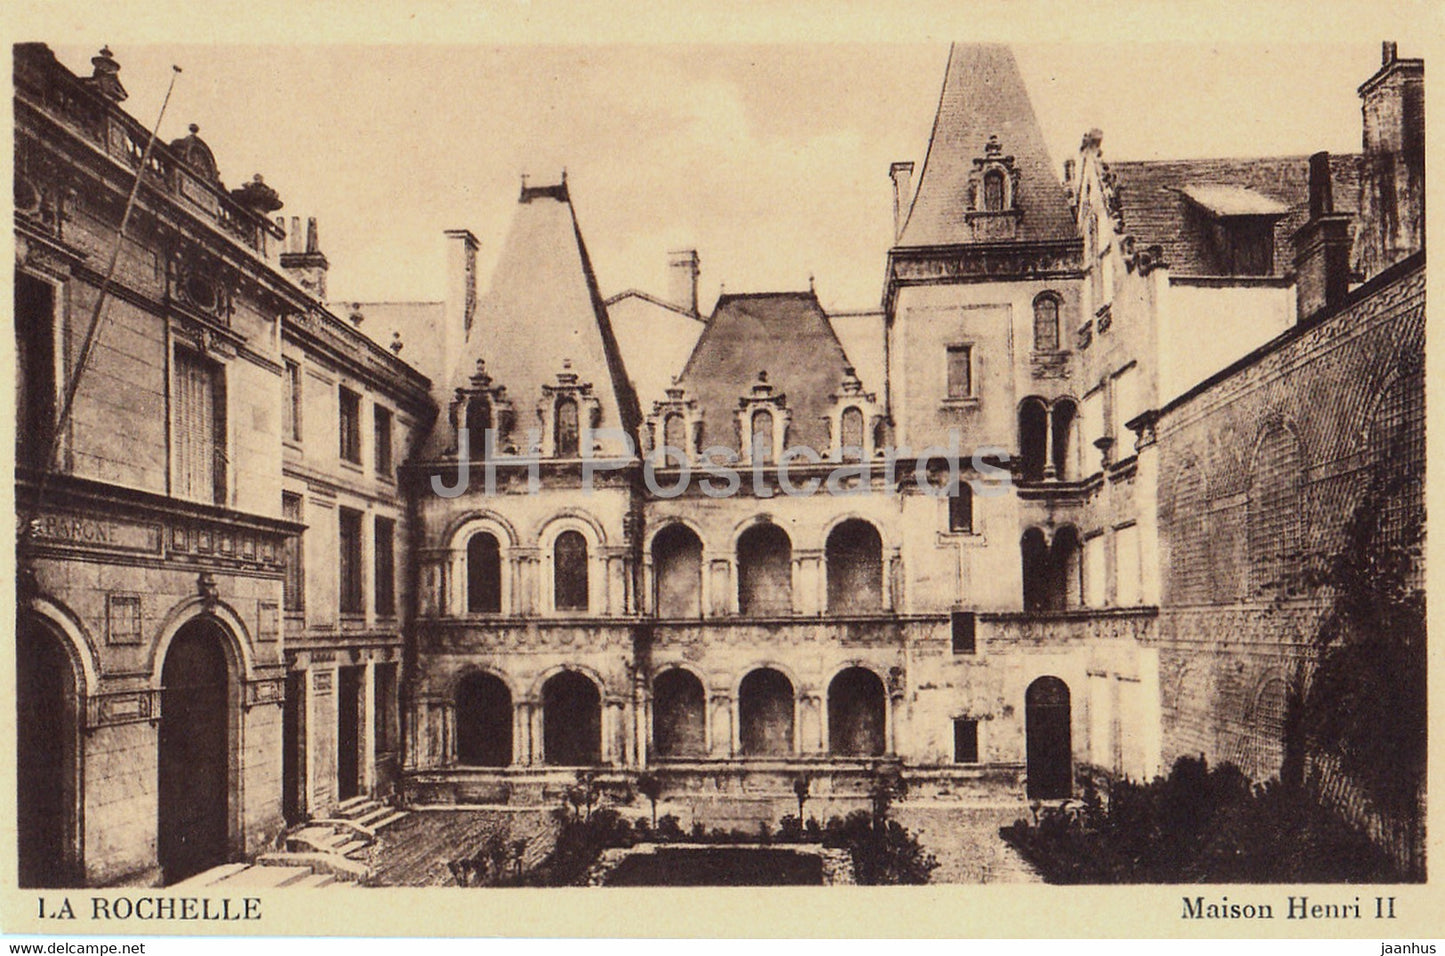 La Rochelle - Maison Henri II - old postcard - France - unused - JH Postcards